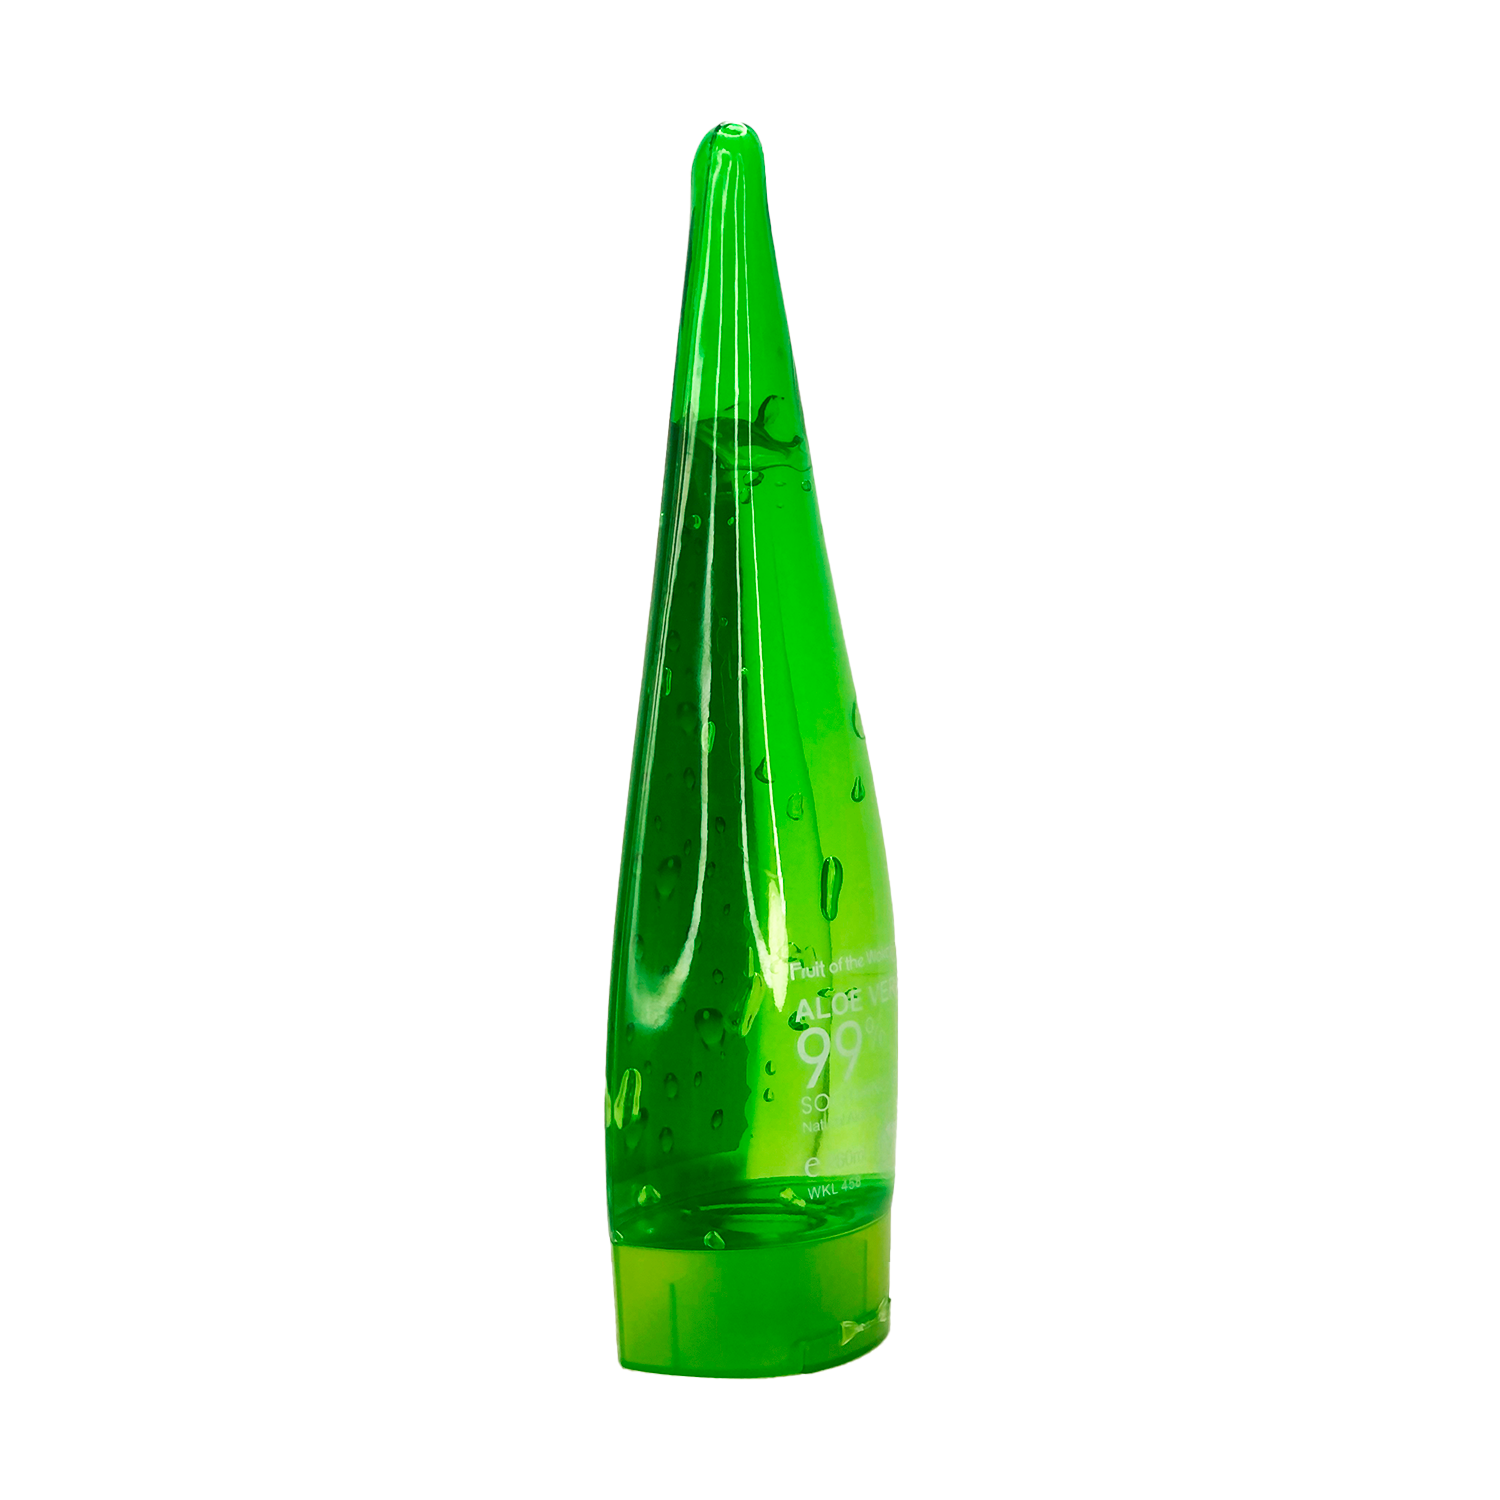 Aloe Vera 99% - Gel Calmante 260ml